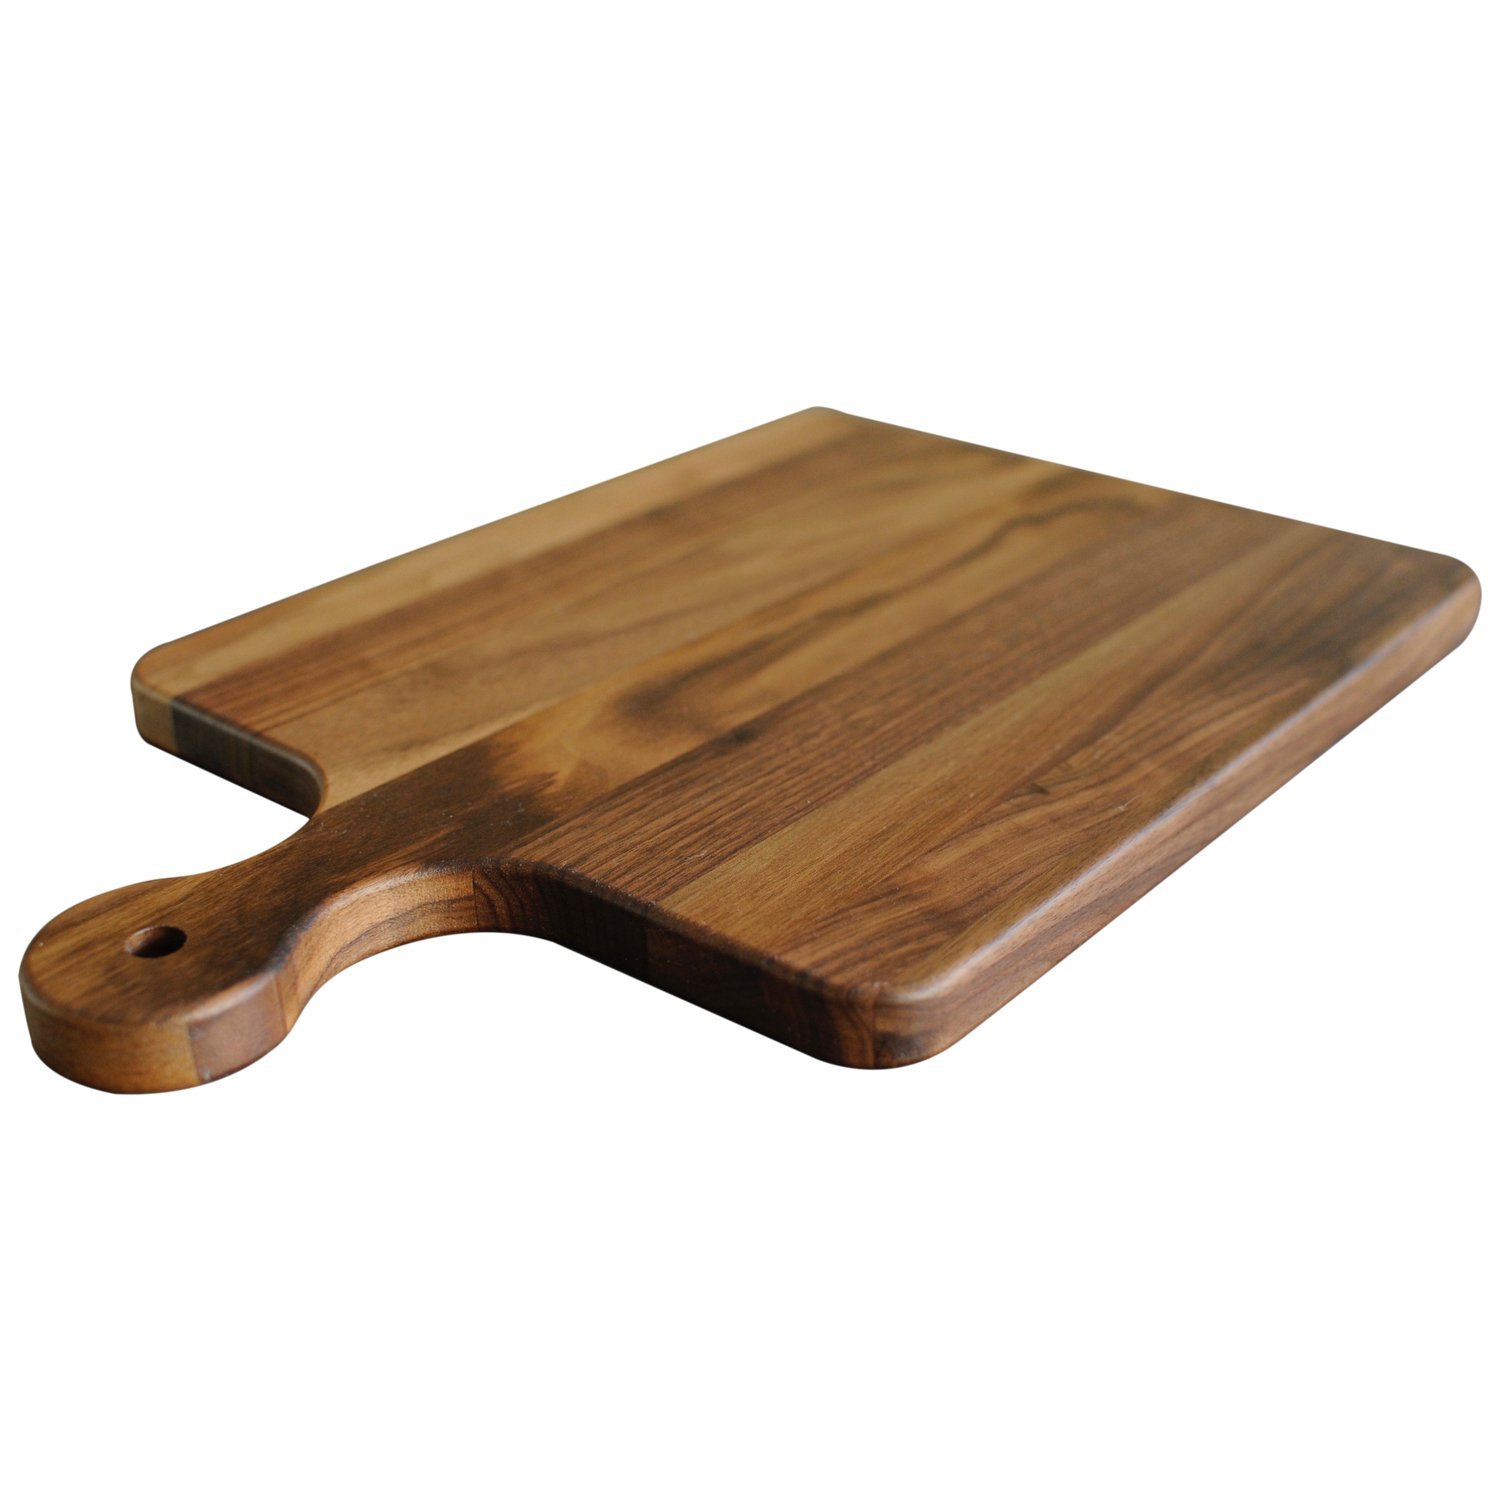 Wood paddle cutting board